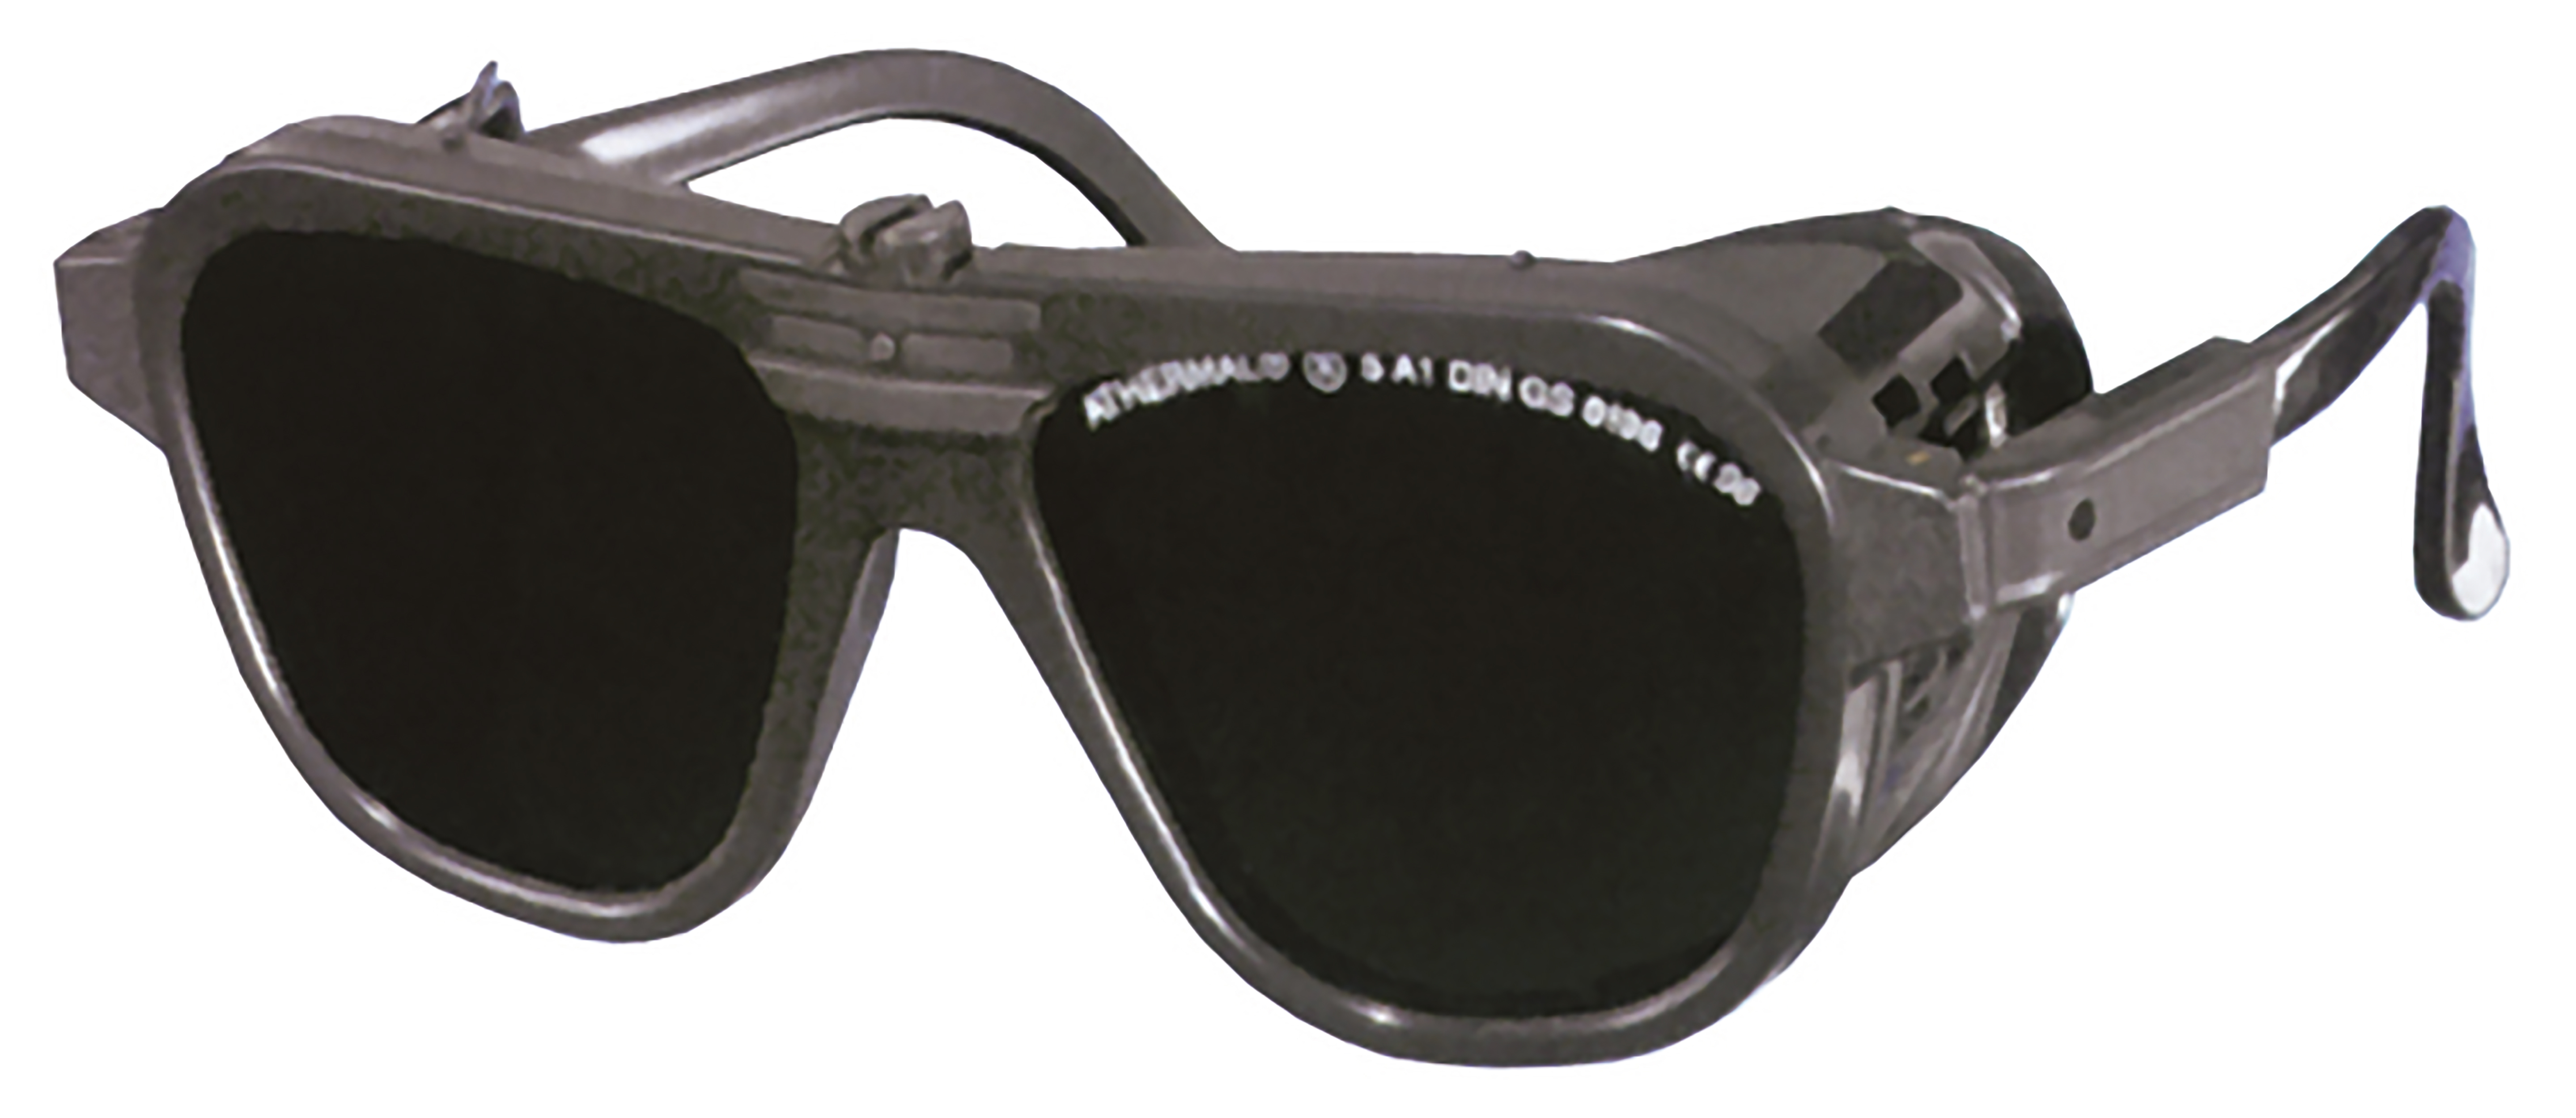 Nylon goggles 872/6 black colorless laminated lens